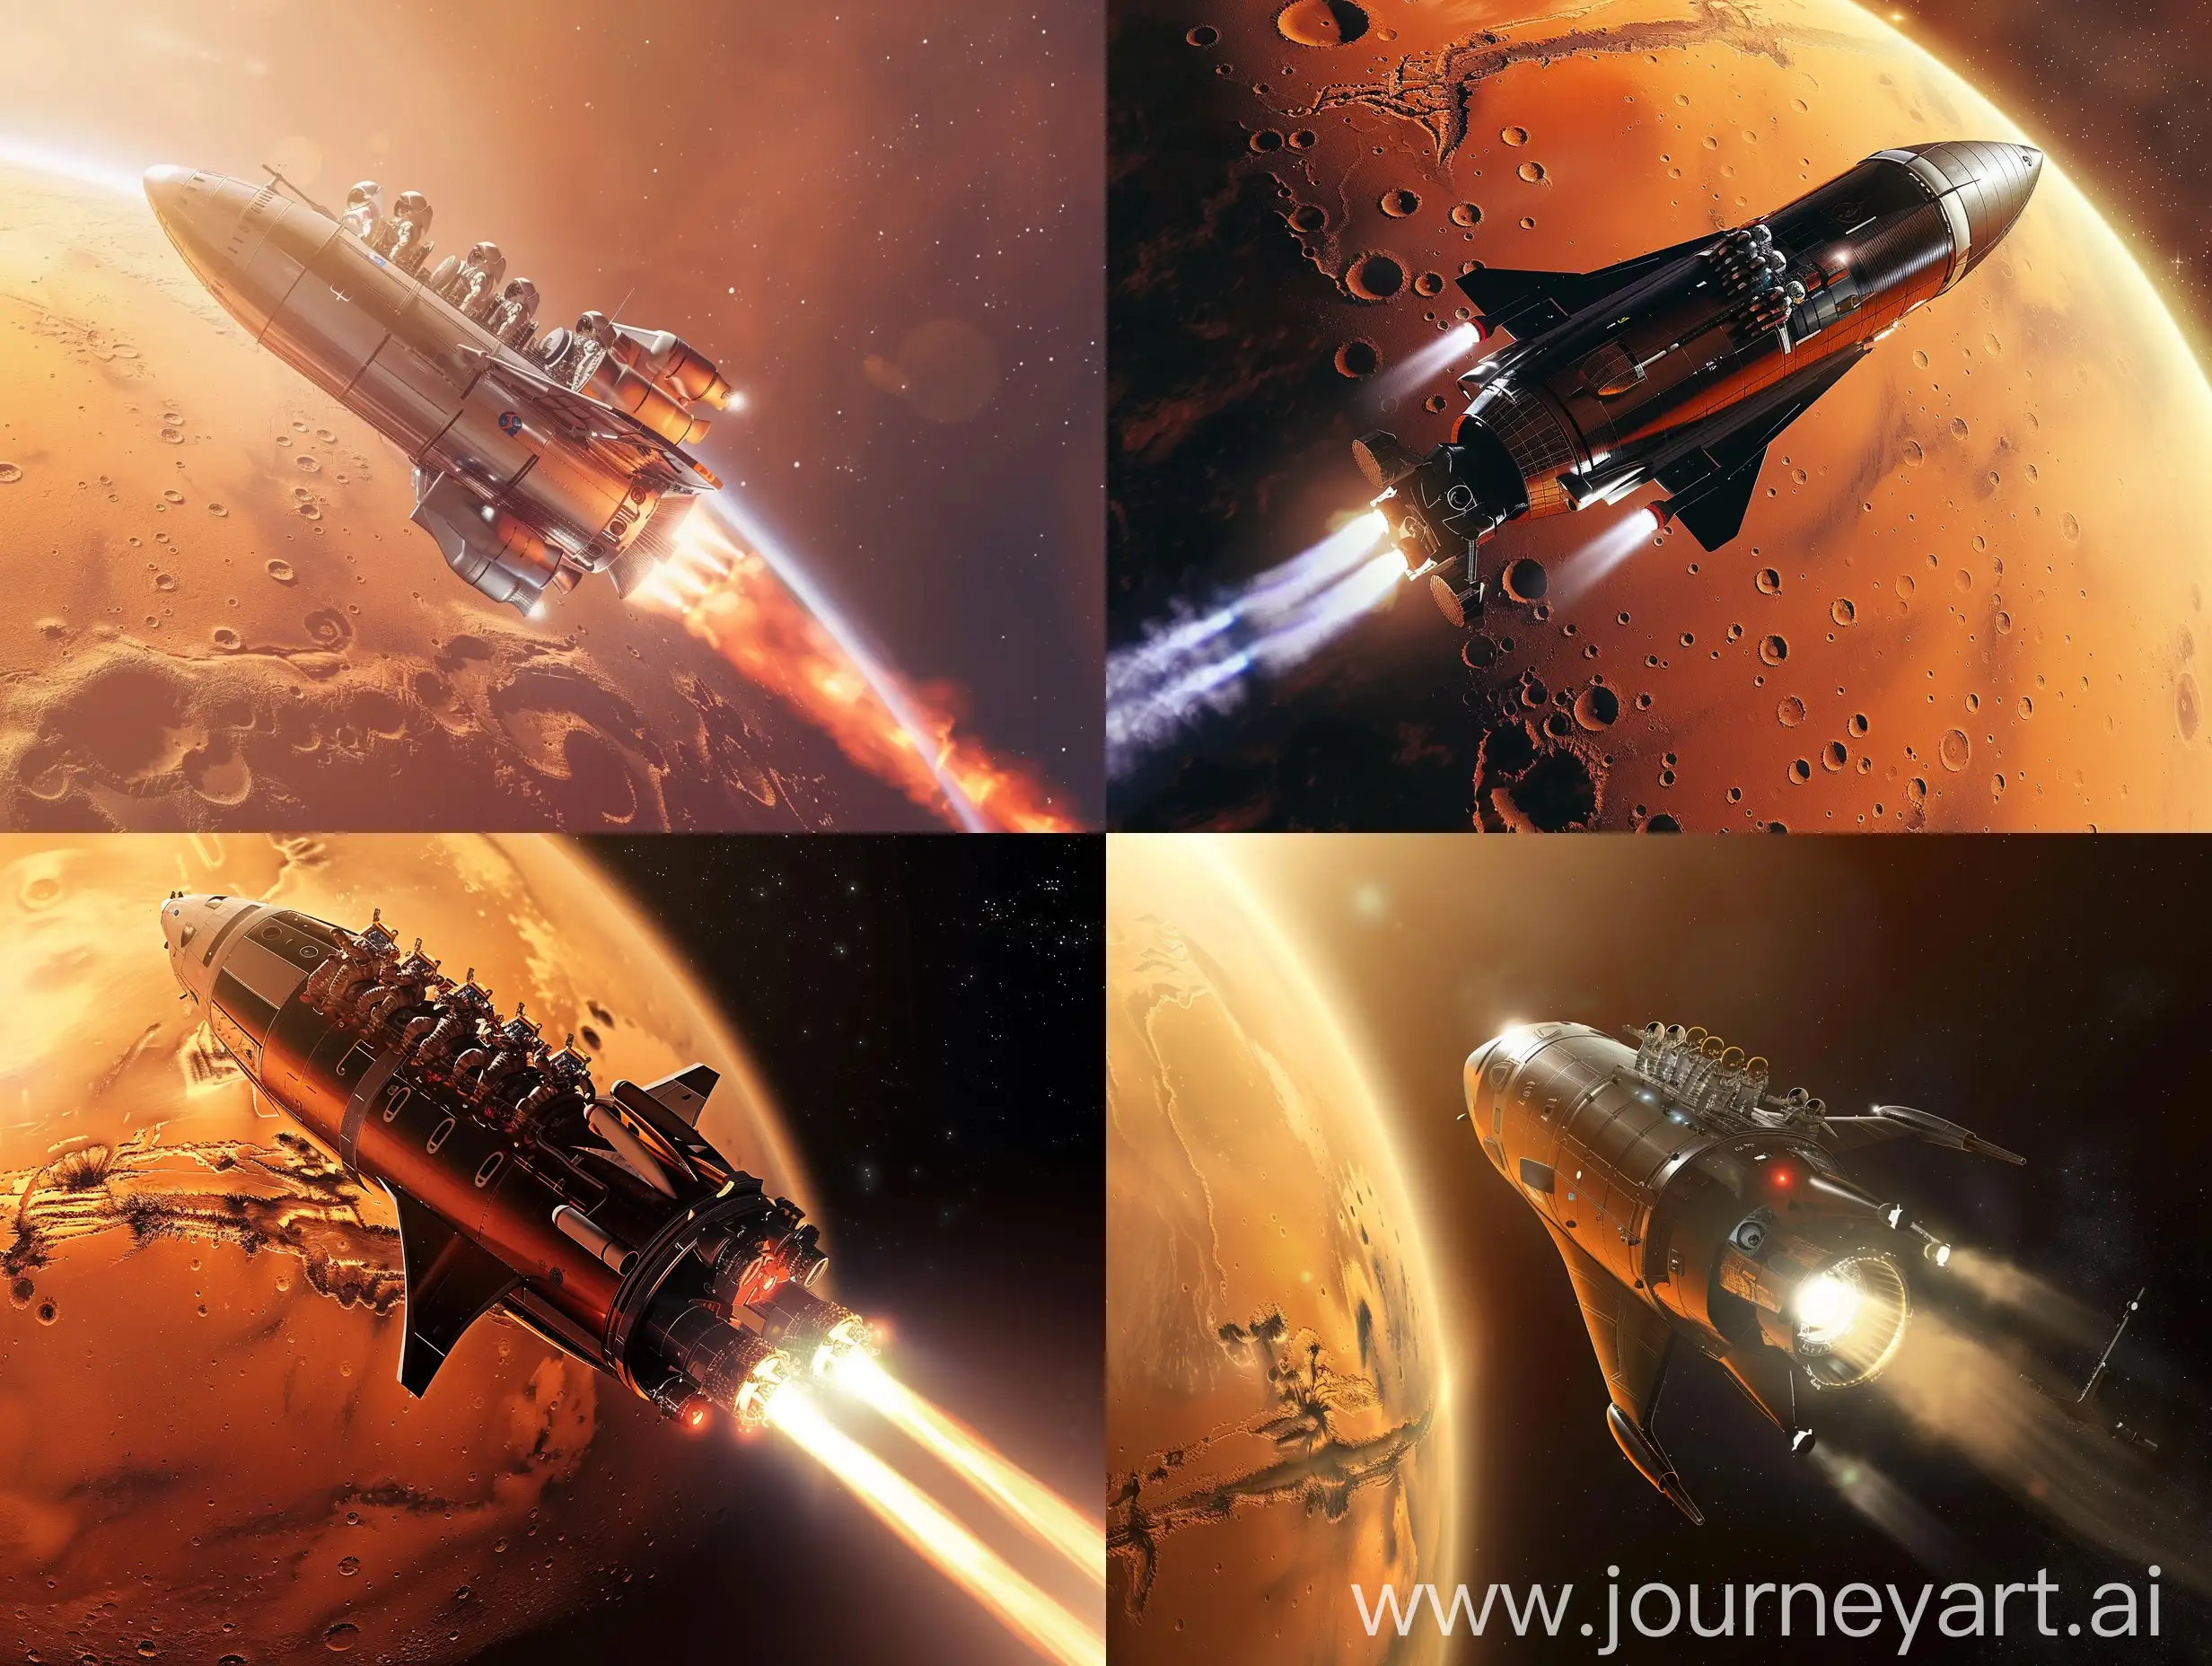 Astronauts-aboard-Spaceship-Heading-to-Mars